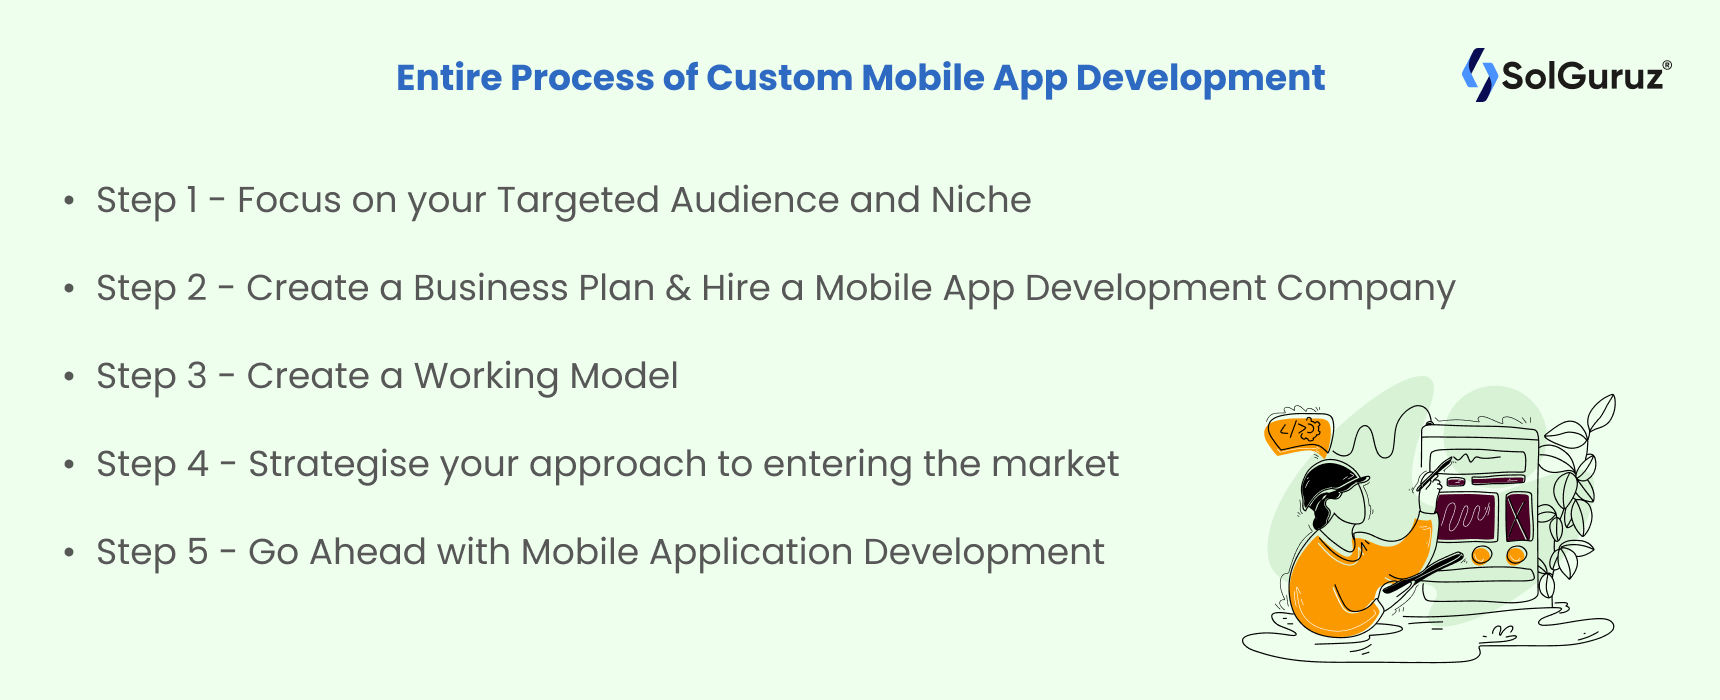 Entire Process of Custom Mobile App Development